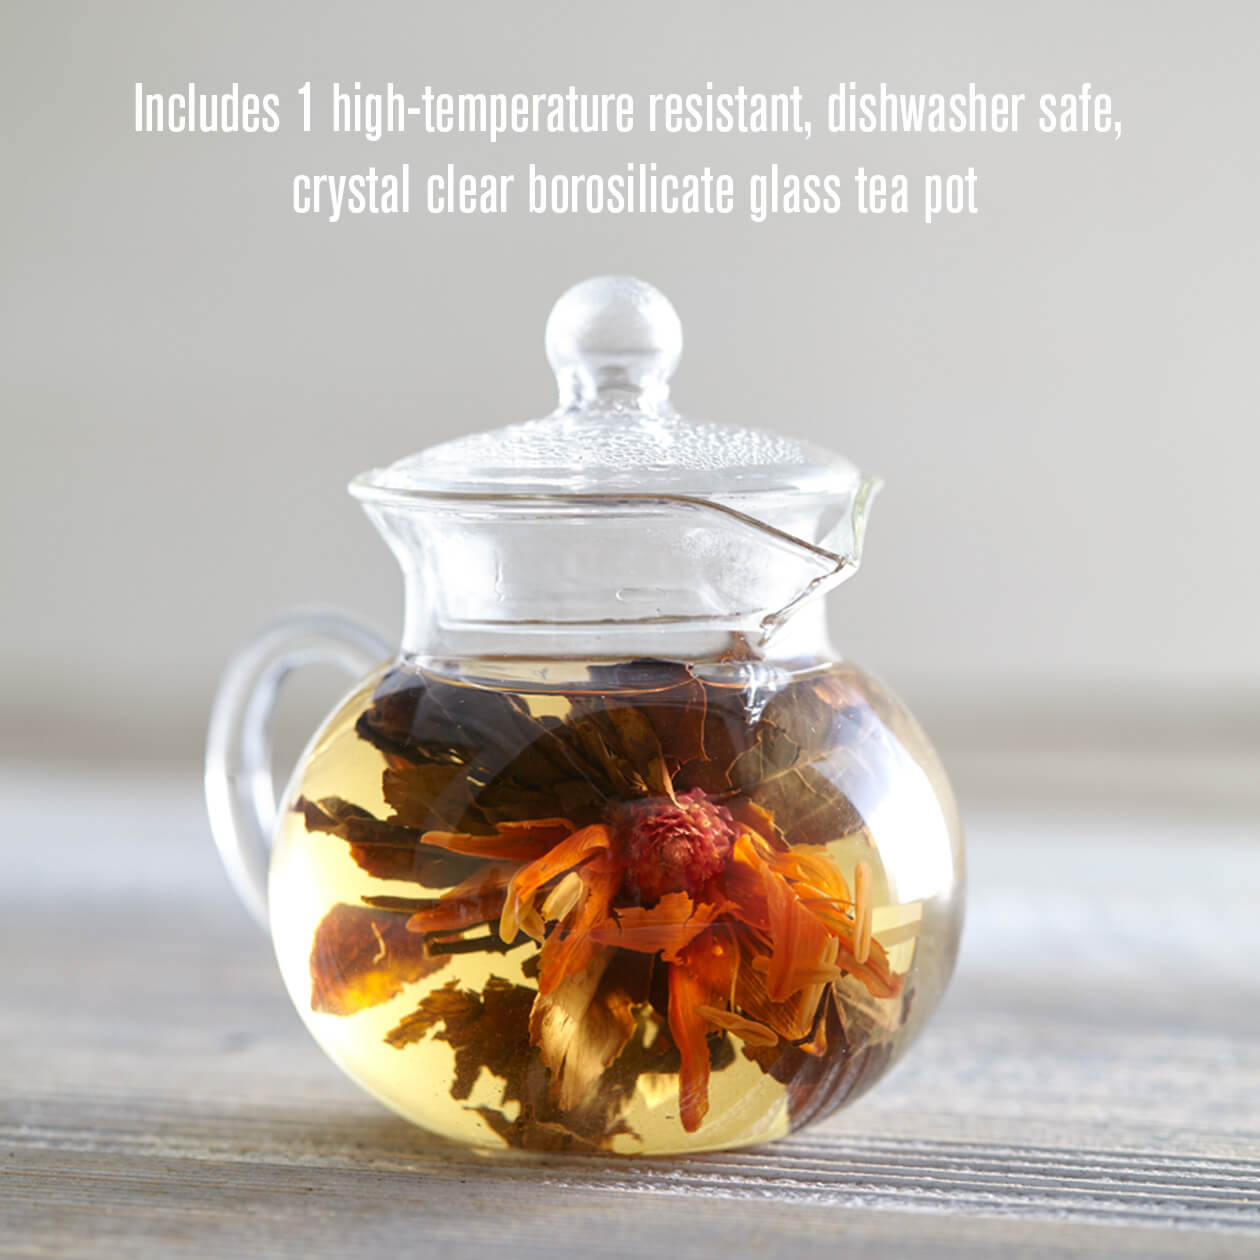 The flowering tea glass tea pot included with each Numi organic Flowering Tea Set